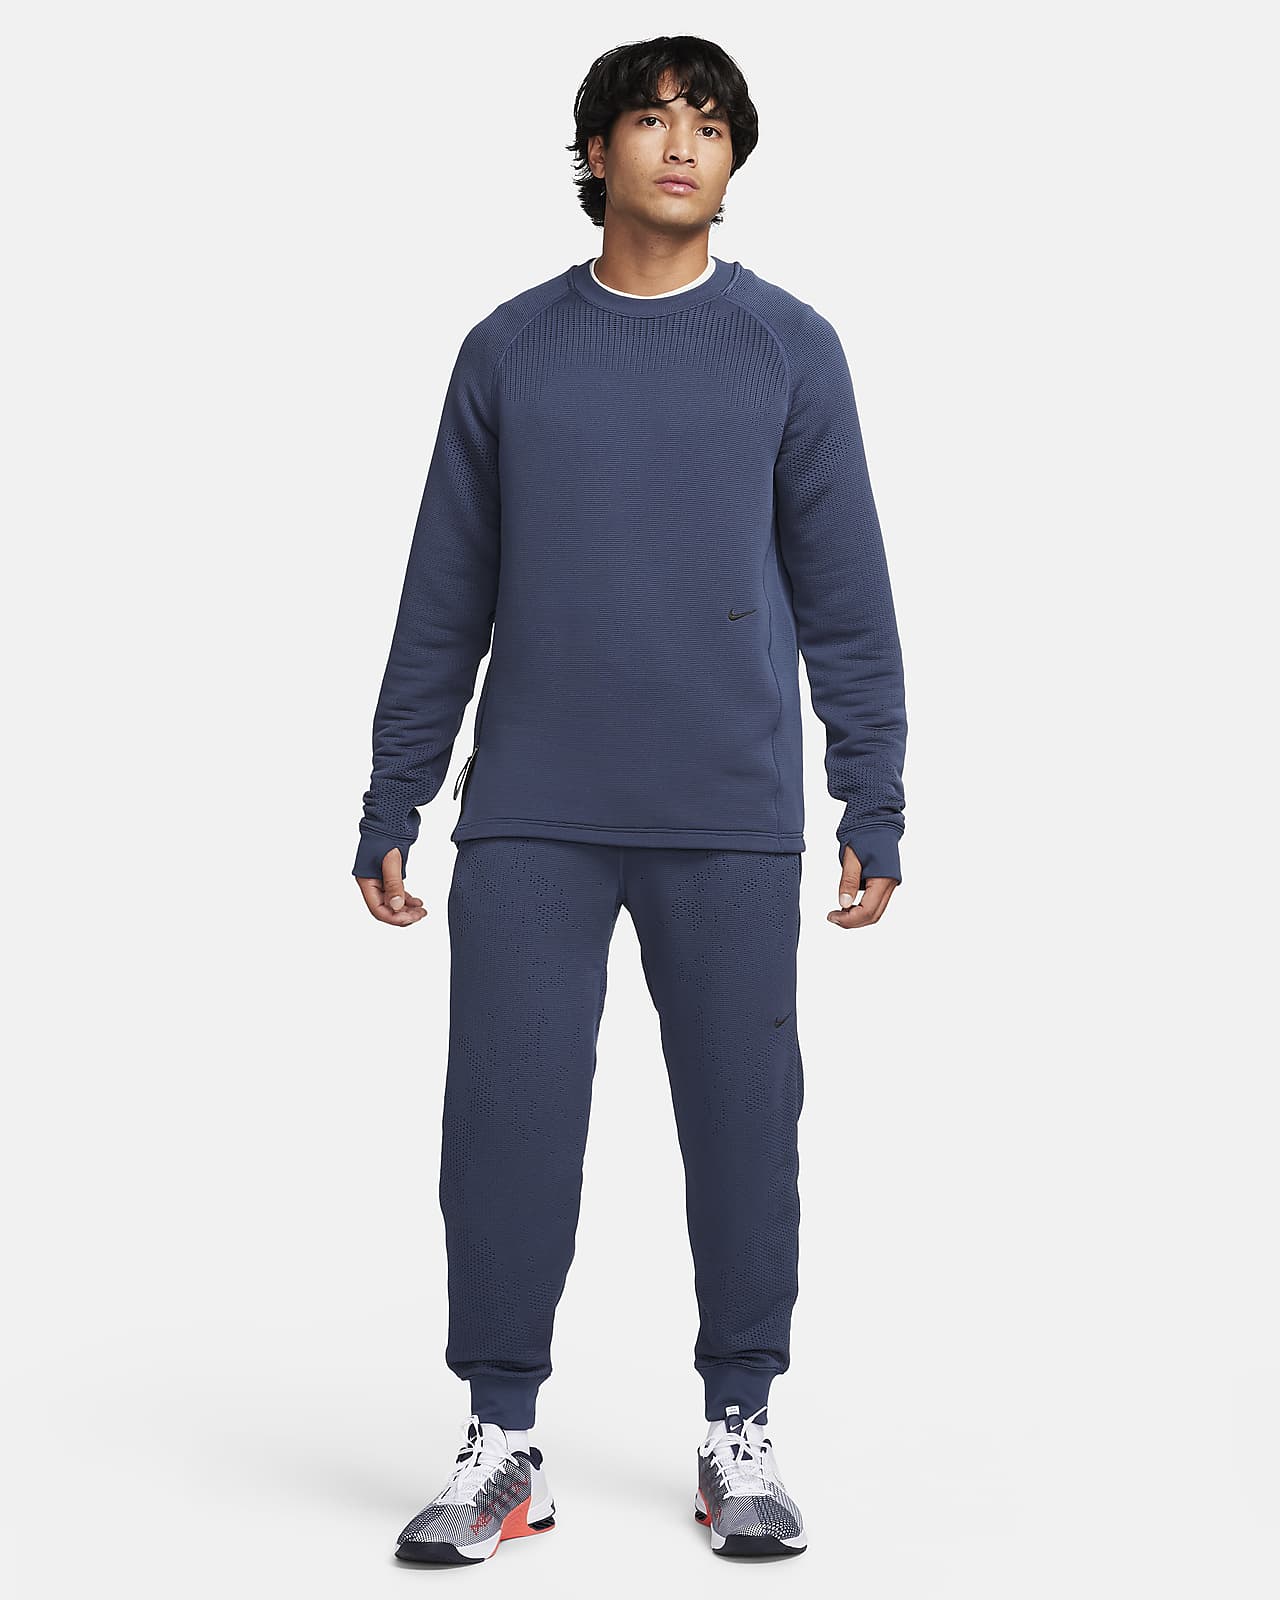 Nike Therma Dri-fit Fleece Lined Pants Size L Gray Style #827778-063 | eBay